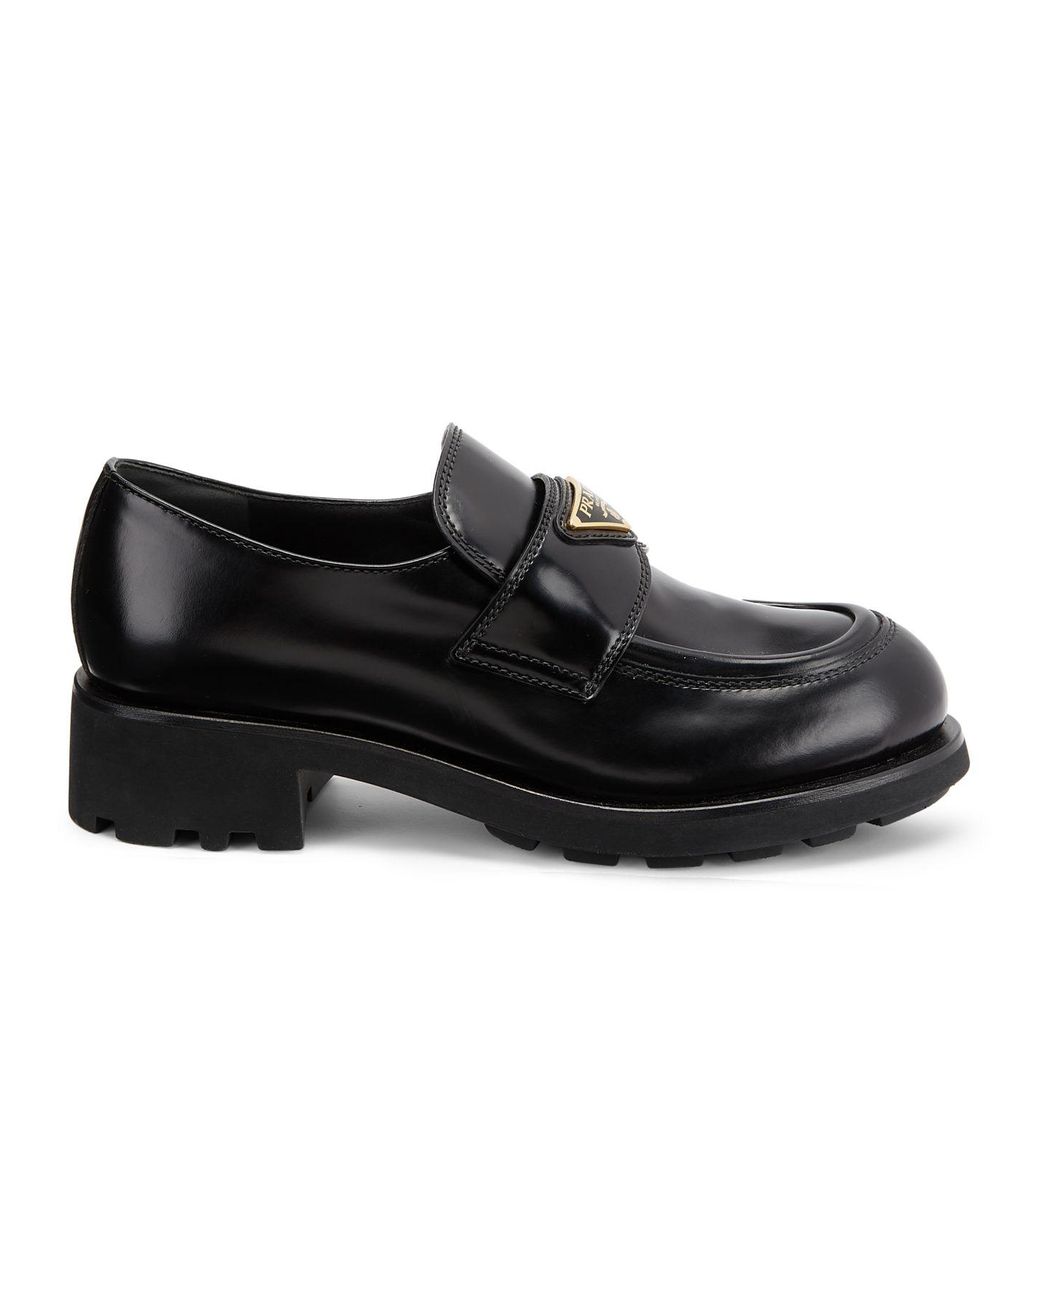 Prada Leather Lug-sole Loafers in Nero (Black) - Lyst